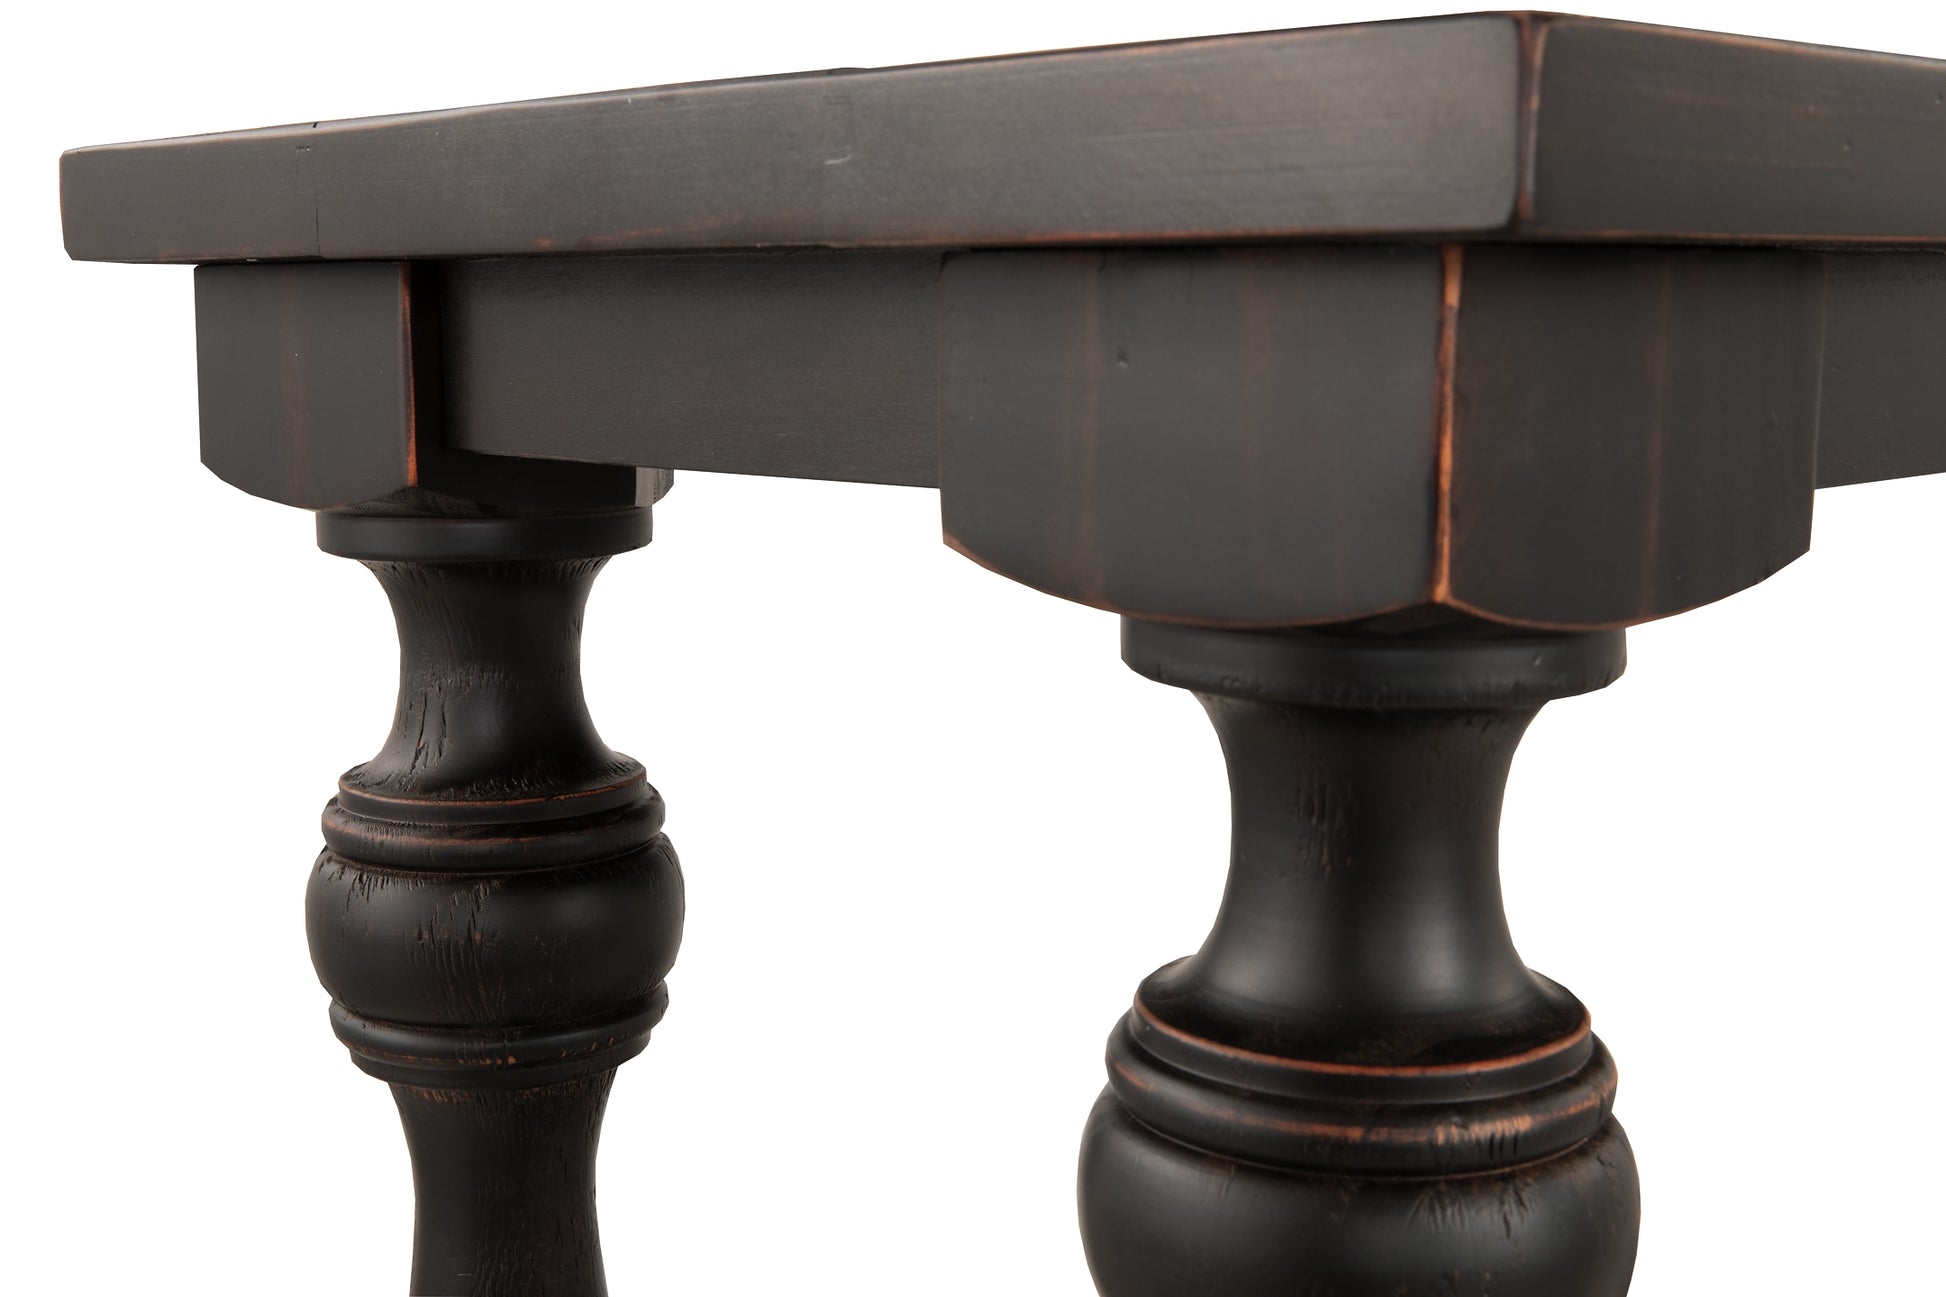 Mallacar Sofa Table Signature Design by Ashley®